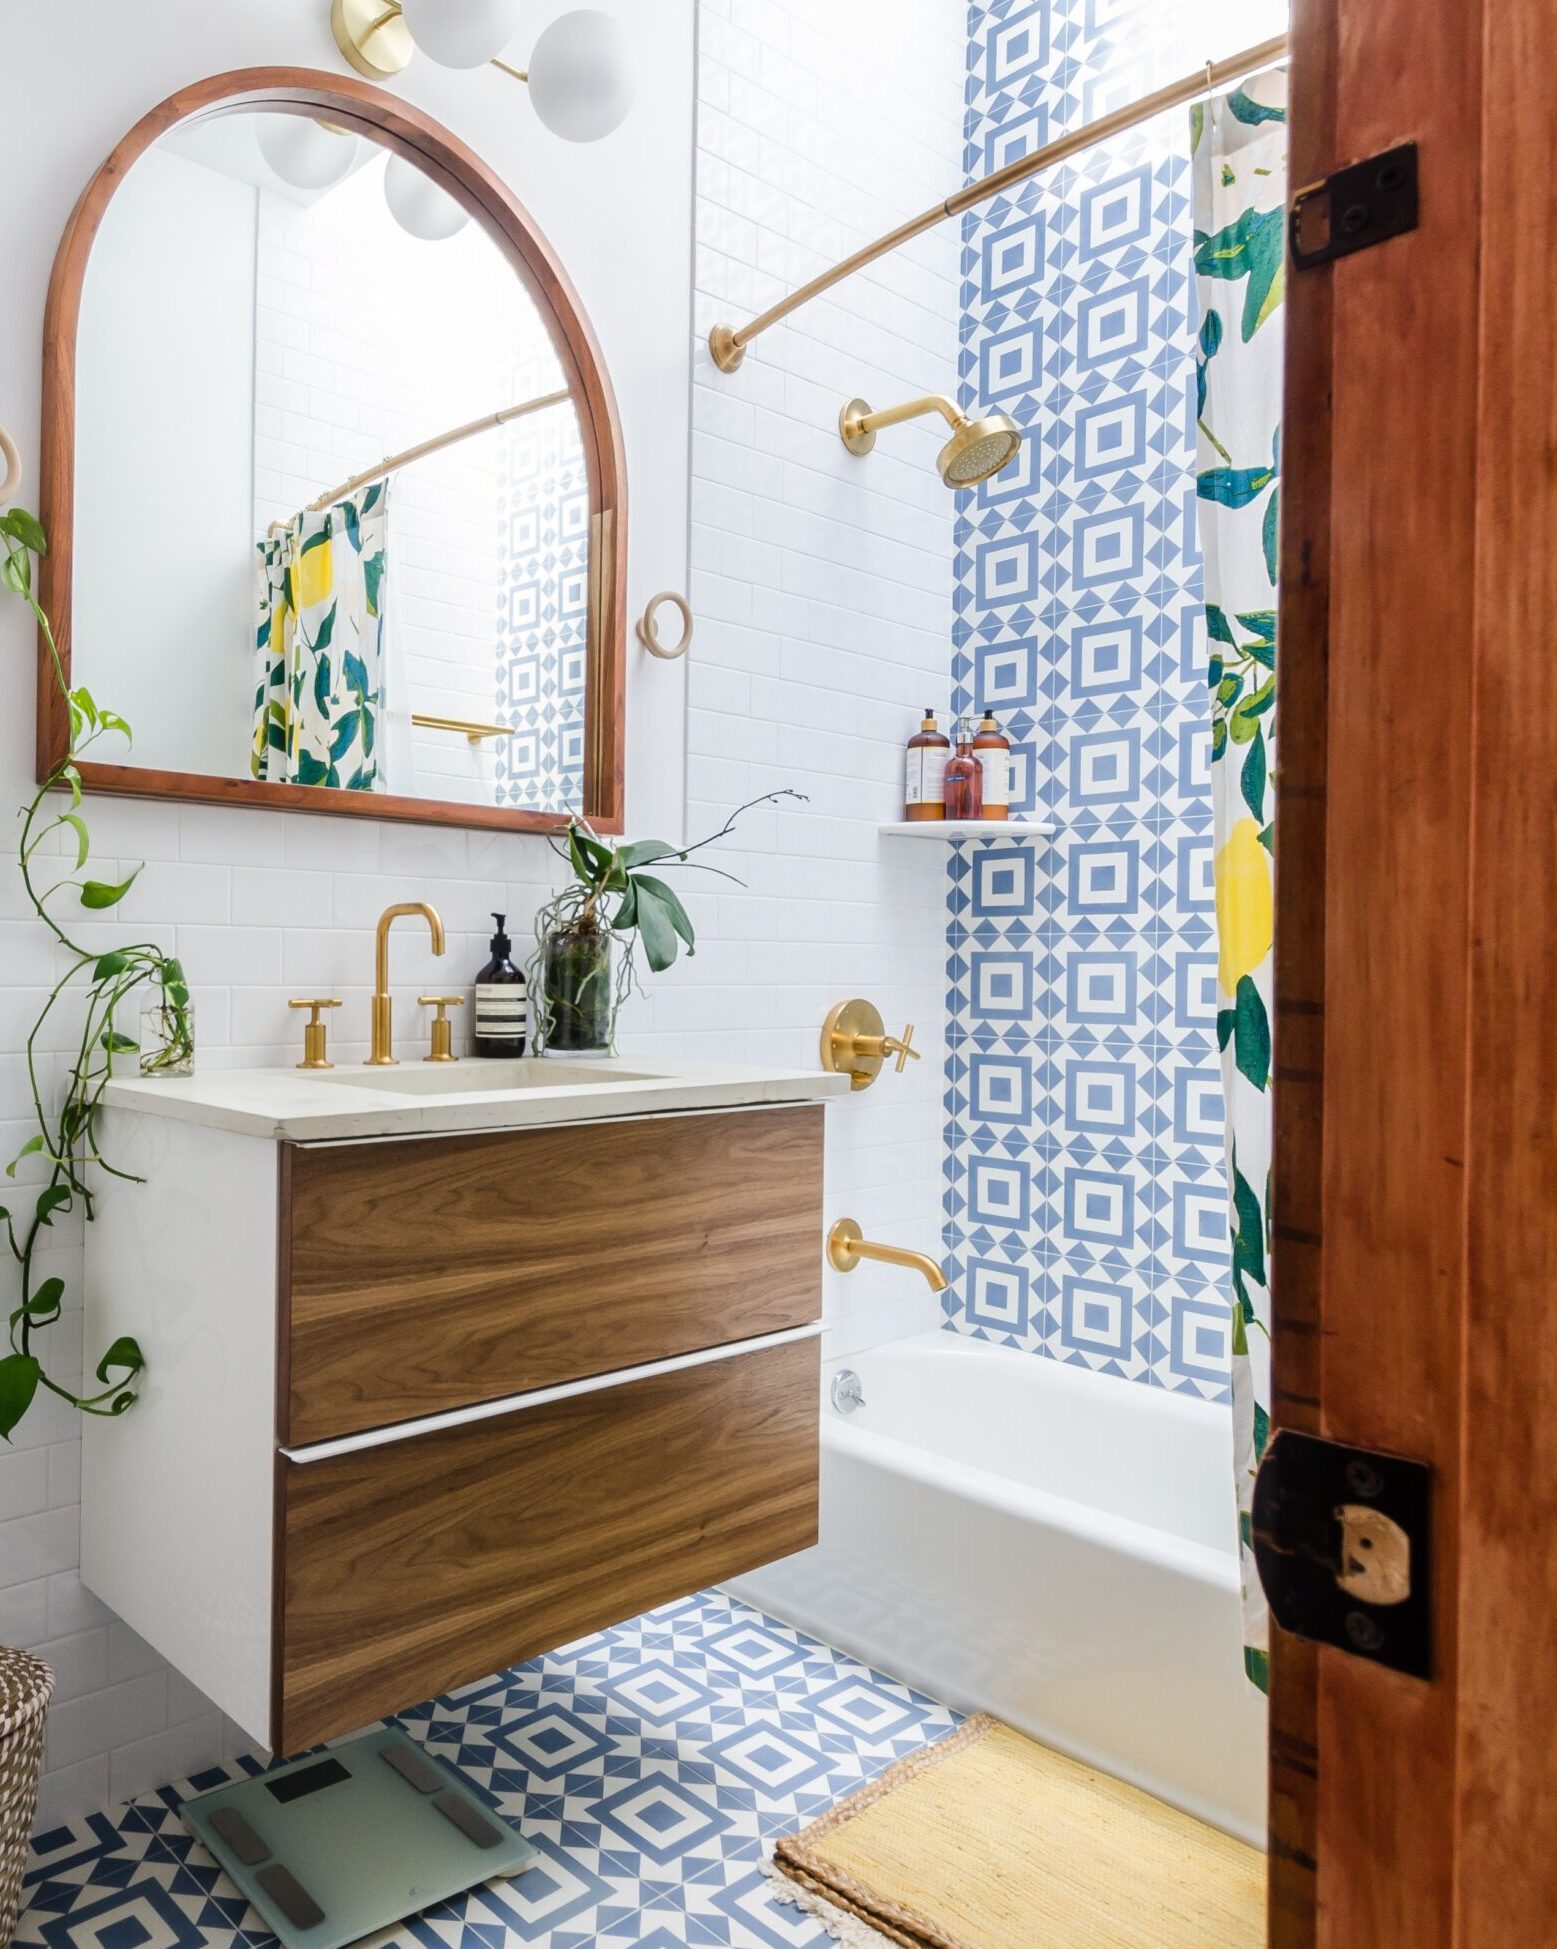  Bamboo Bath Mat Bathroom Rugs Floor Wood Shower Bathtub  Waterproof Non Slip Natural Accessories 16x24 Inch Easy to Clean, 2 pcs :  Home & Kitchen